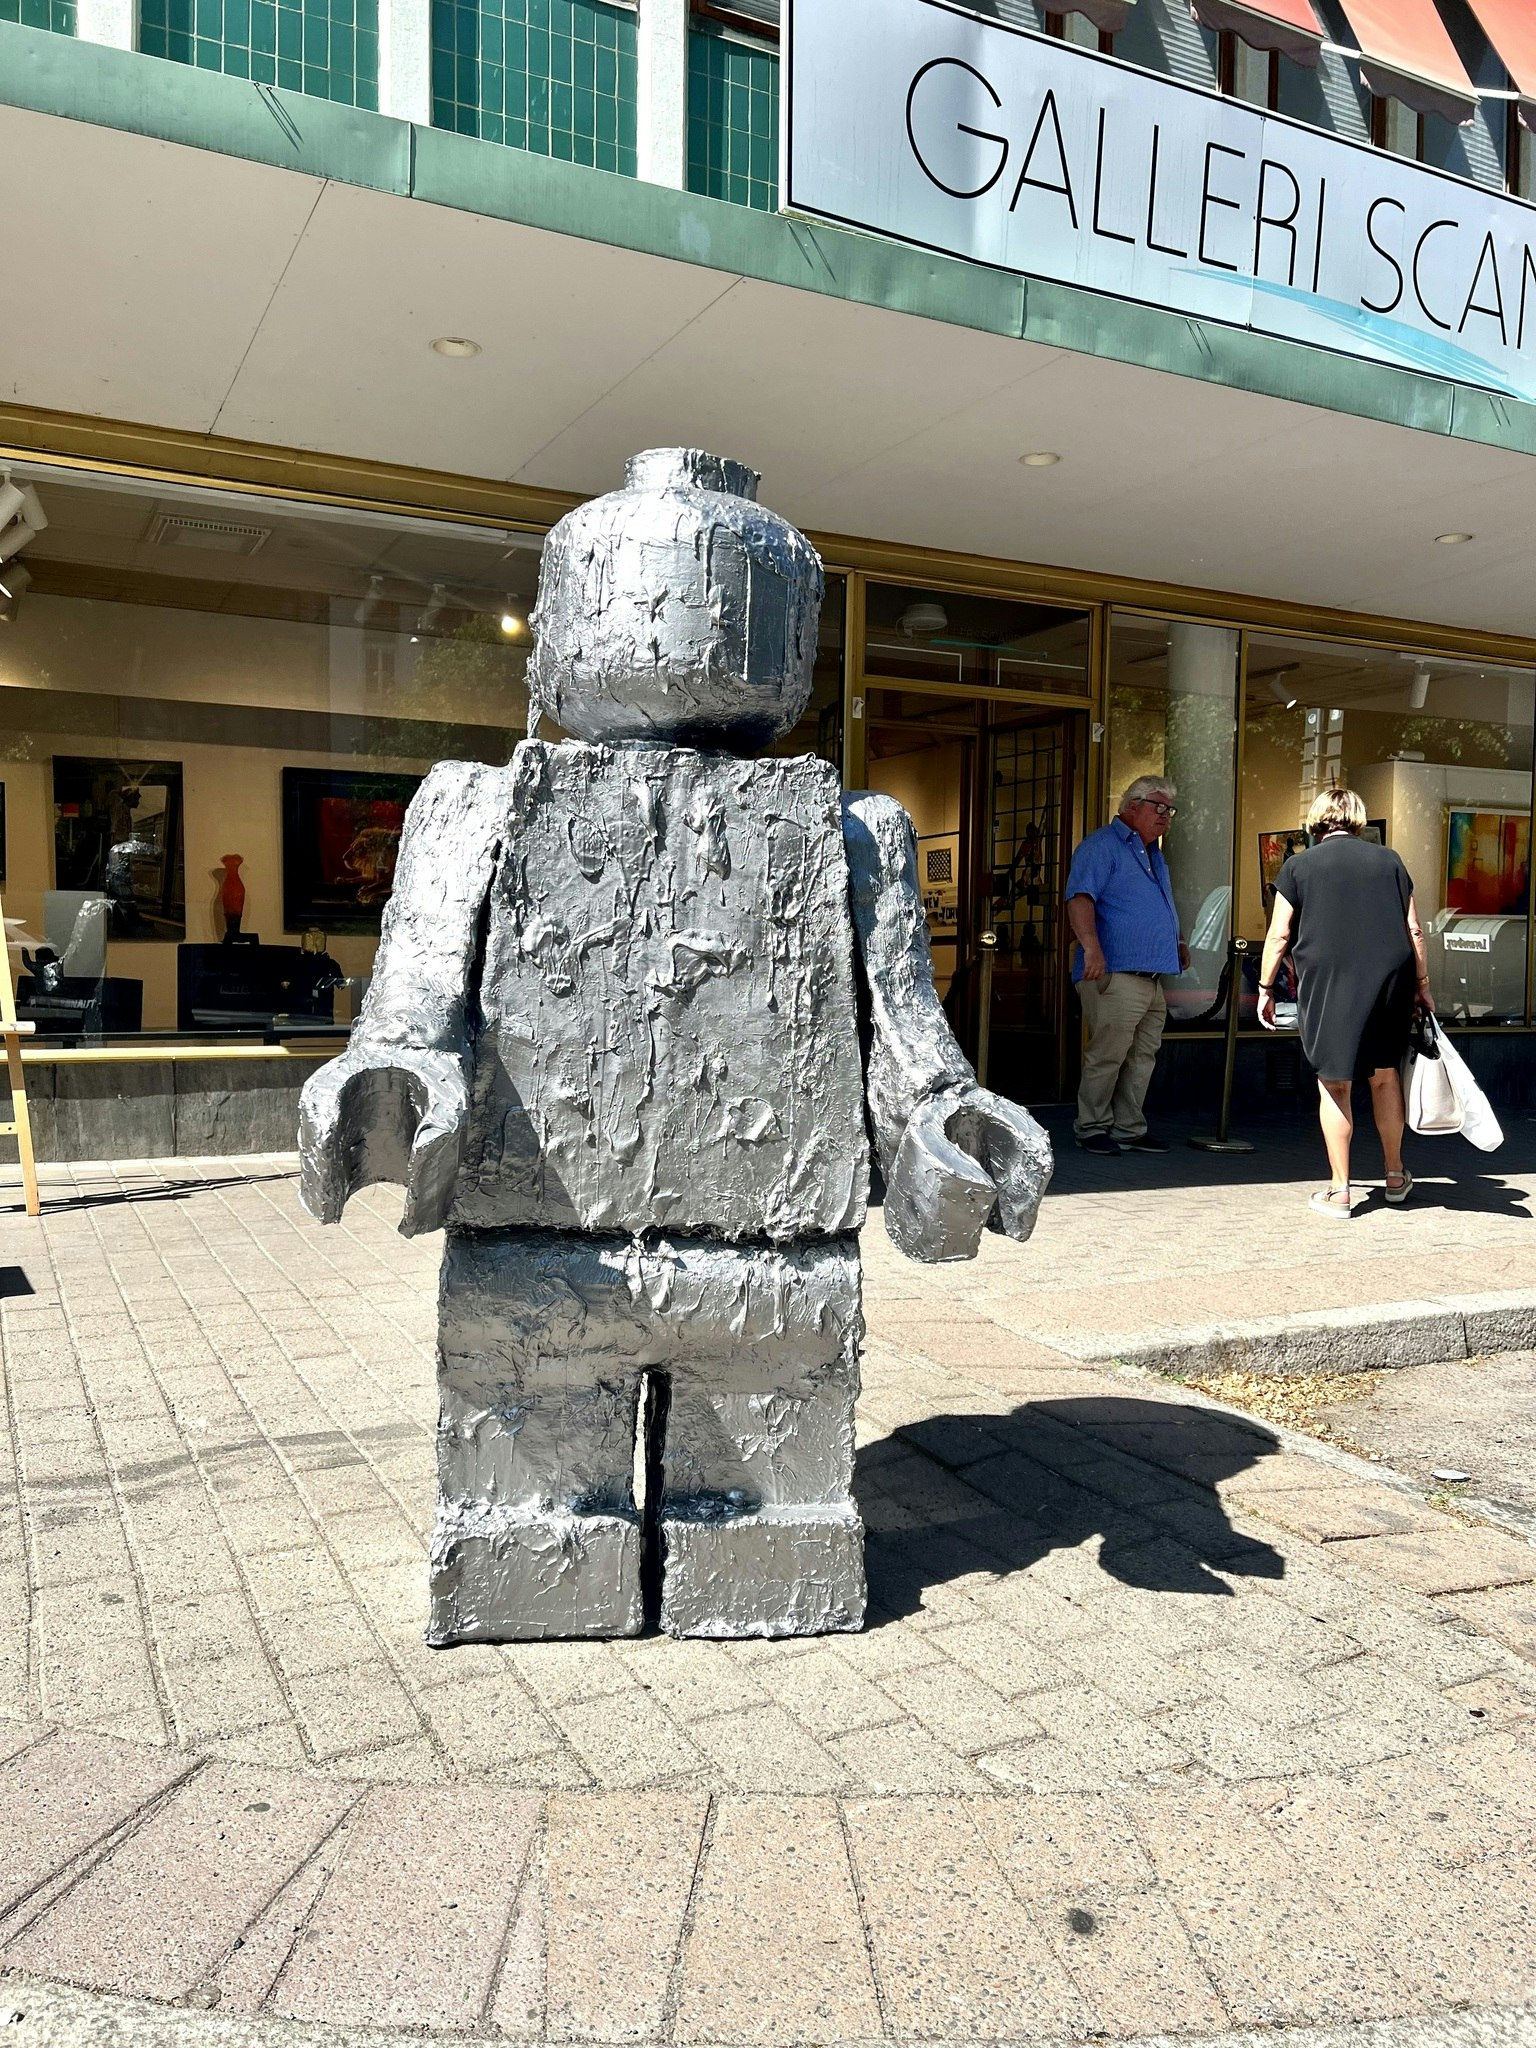 Melted giant Lego" Skulptur av Adam Ström. H. 170 m - Galleri Scandinavia